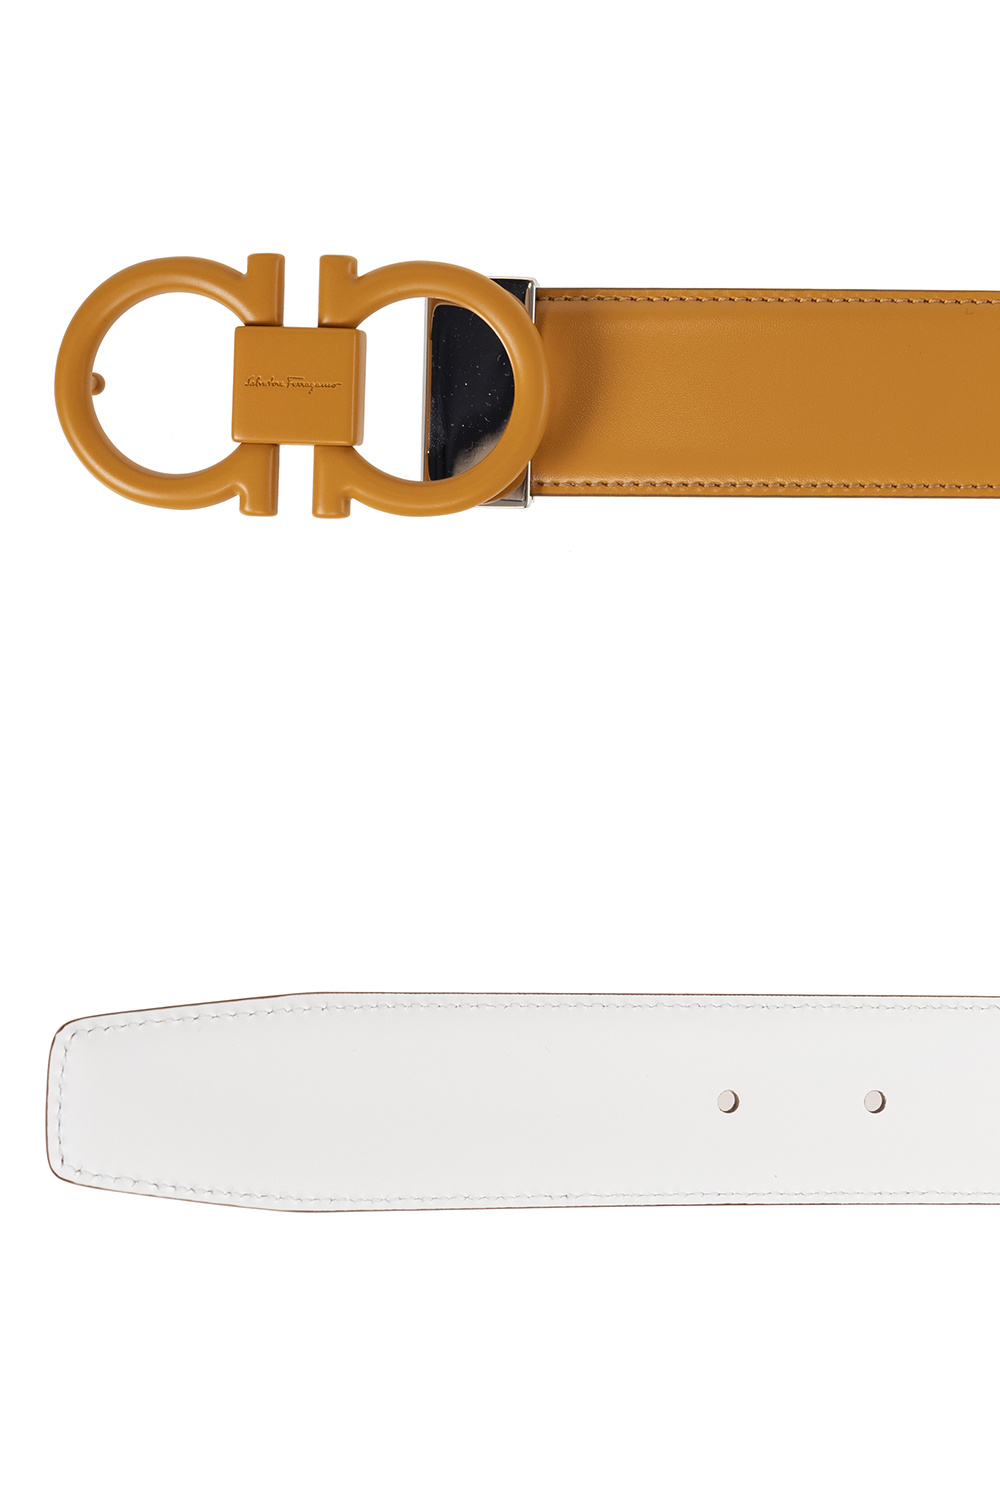 FERRAGAMO Reversible belt | Men's Accessories | Vitkac